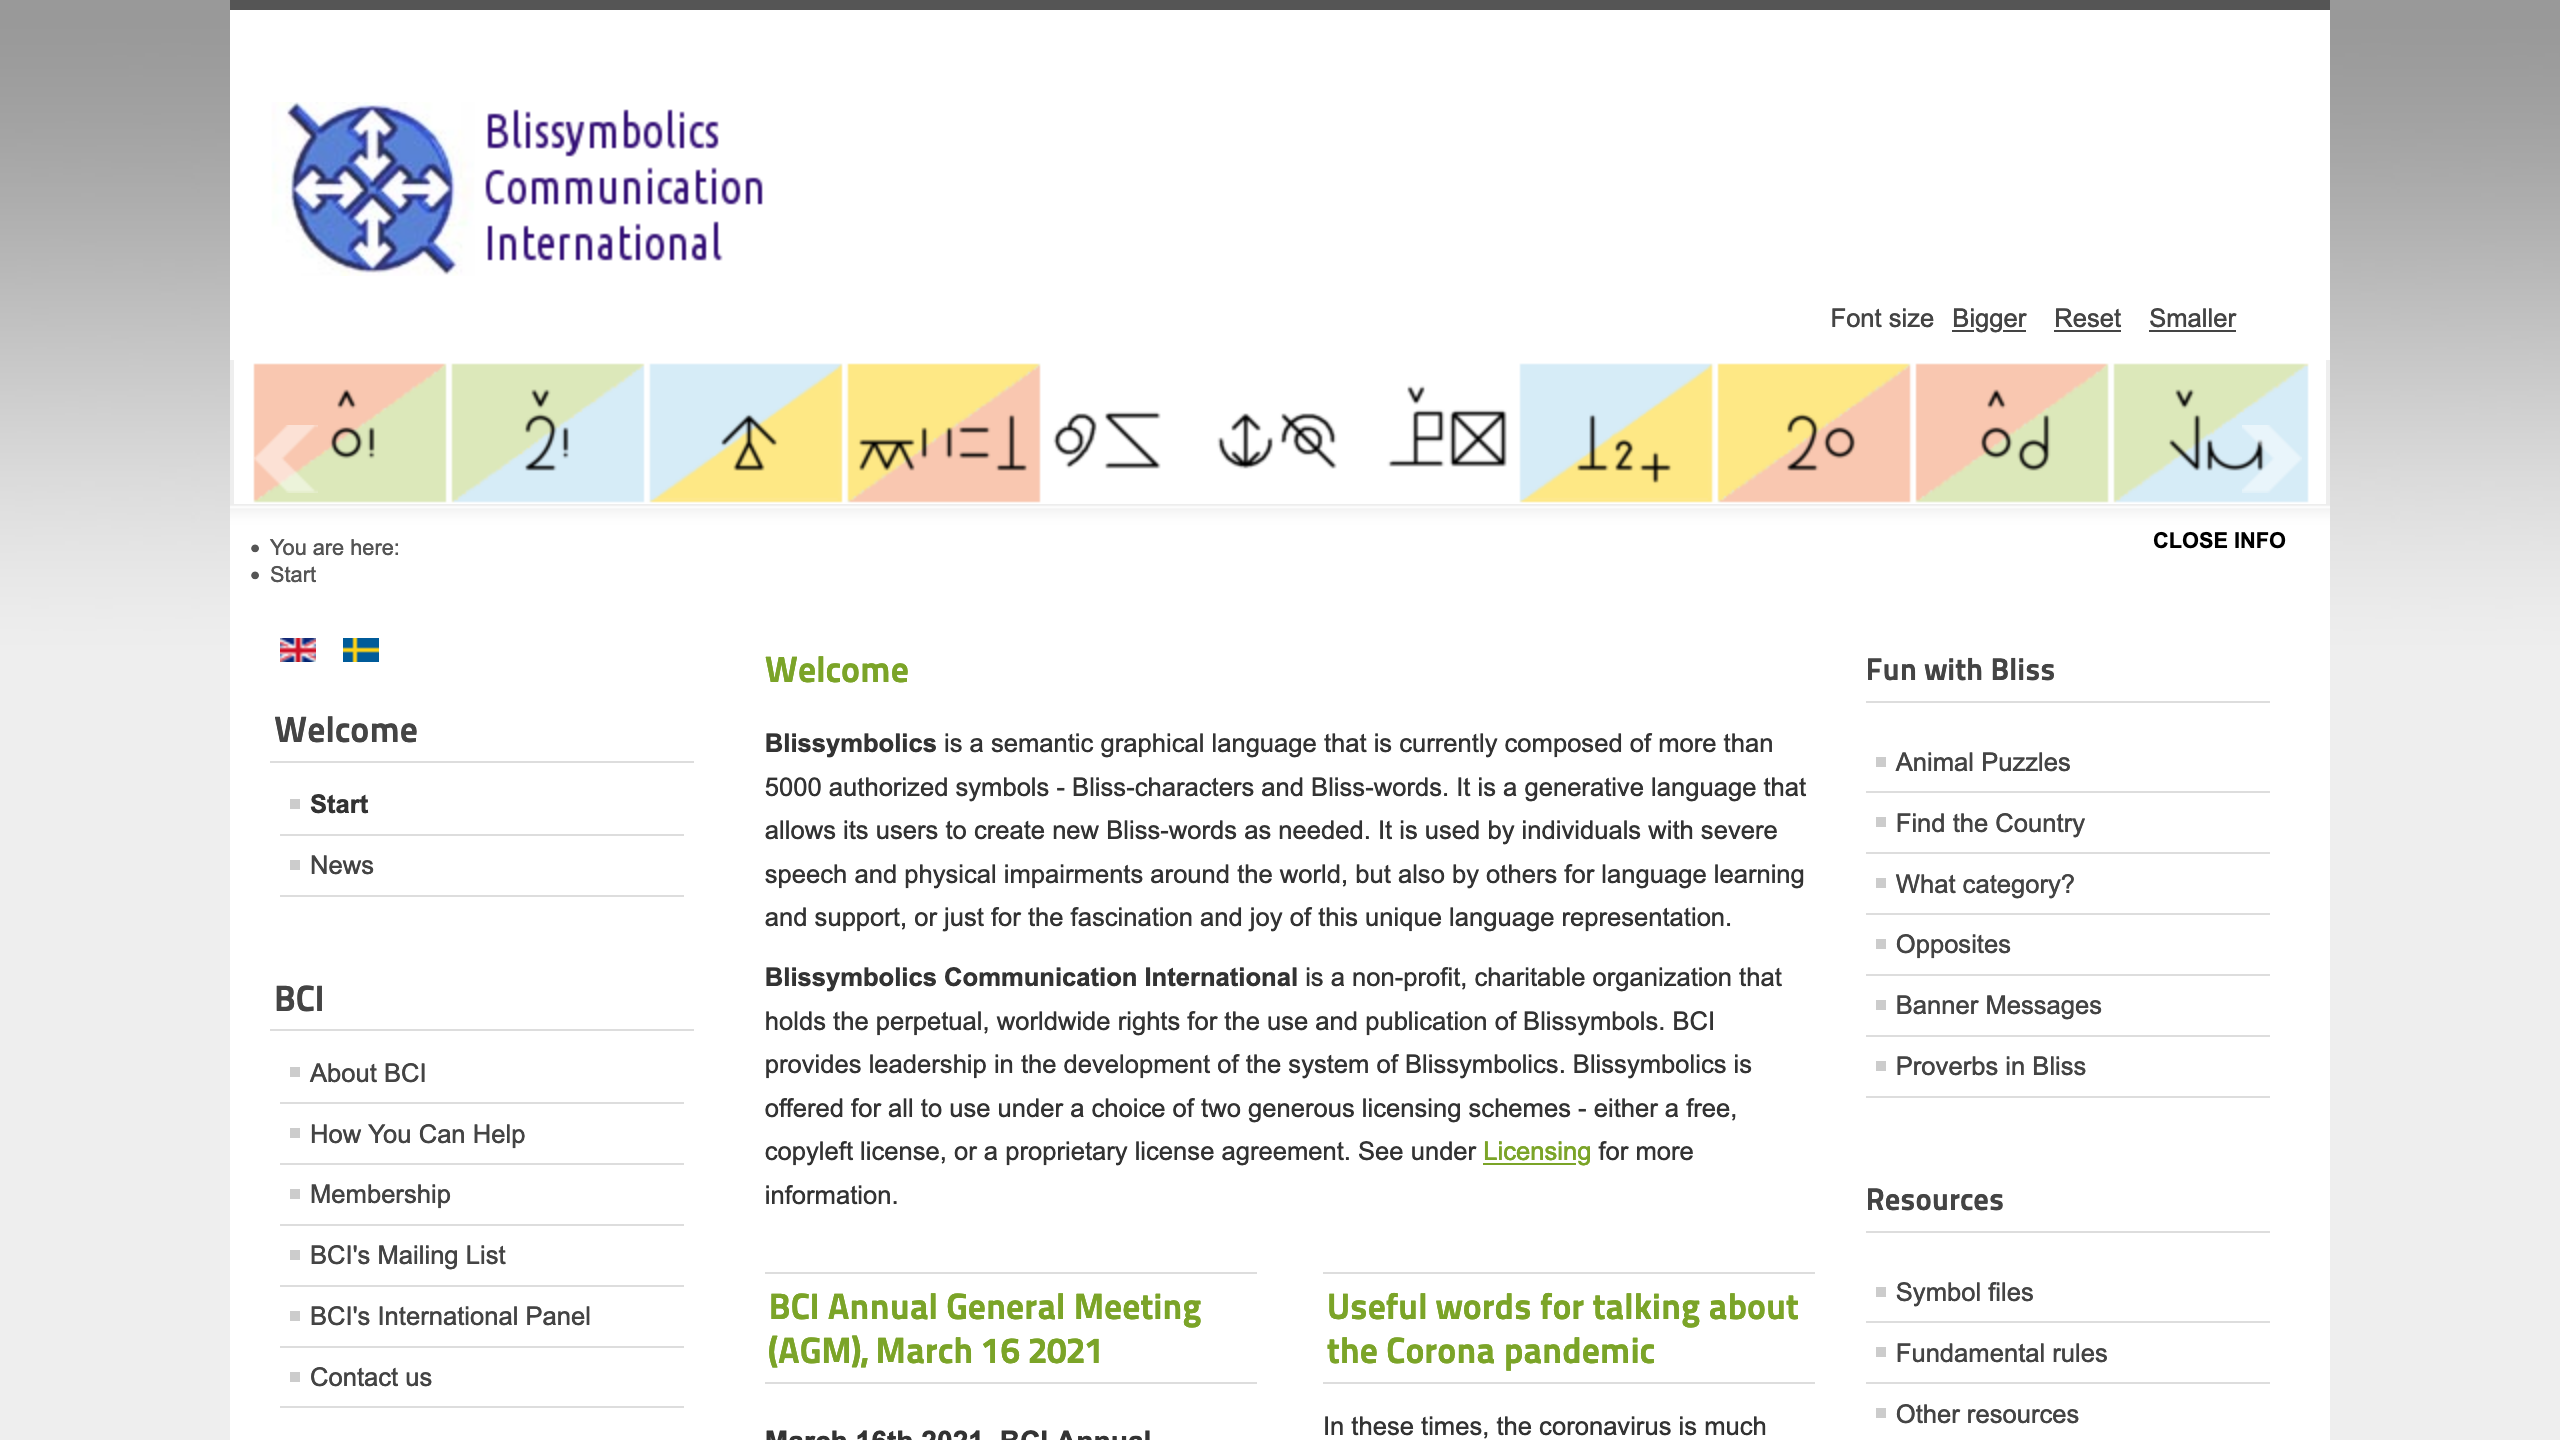 Home page of Blissymbolics Communication International